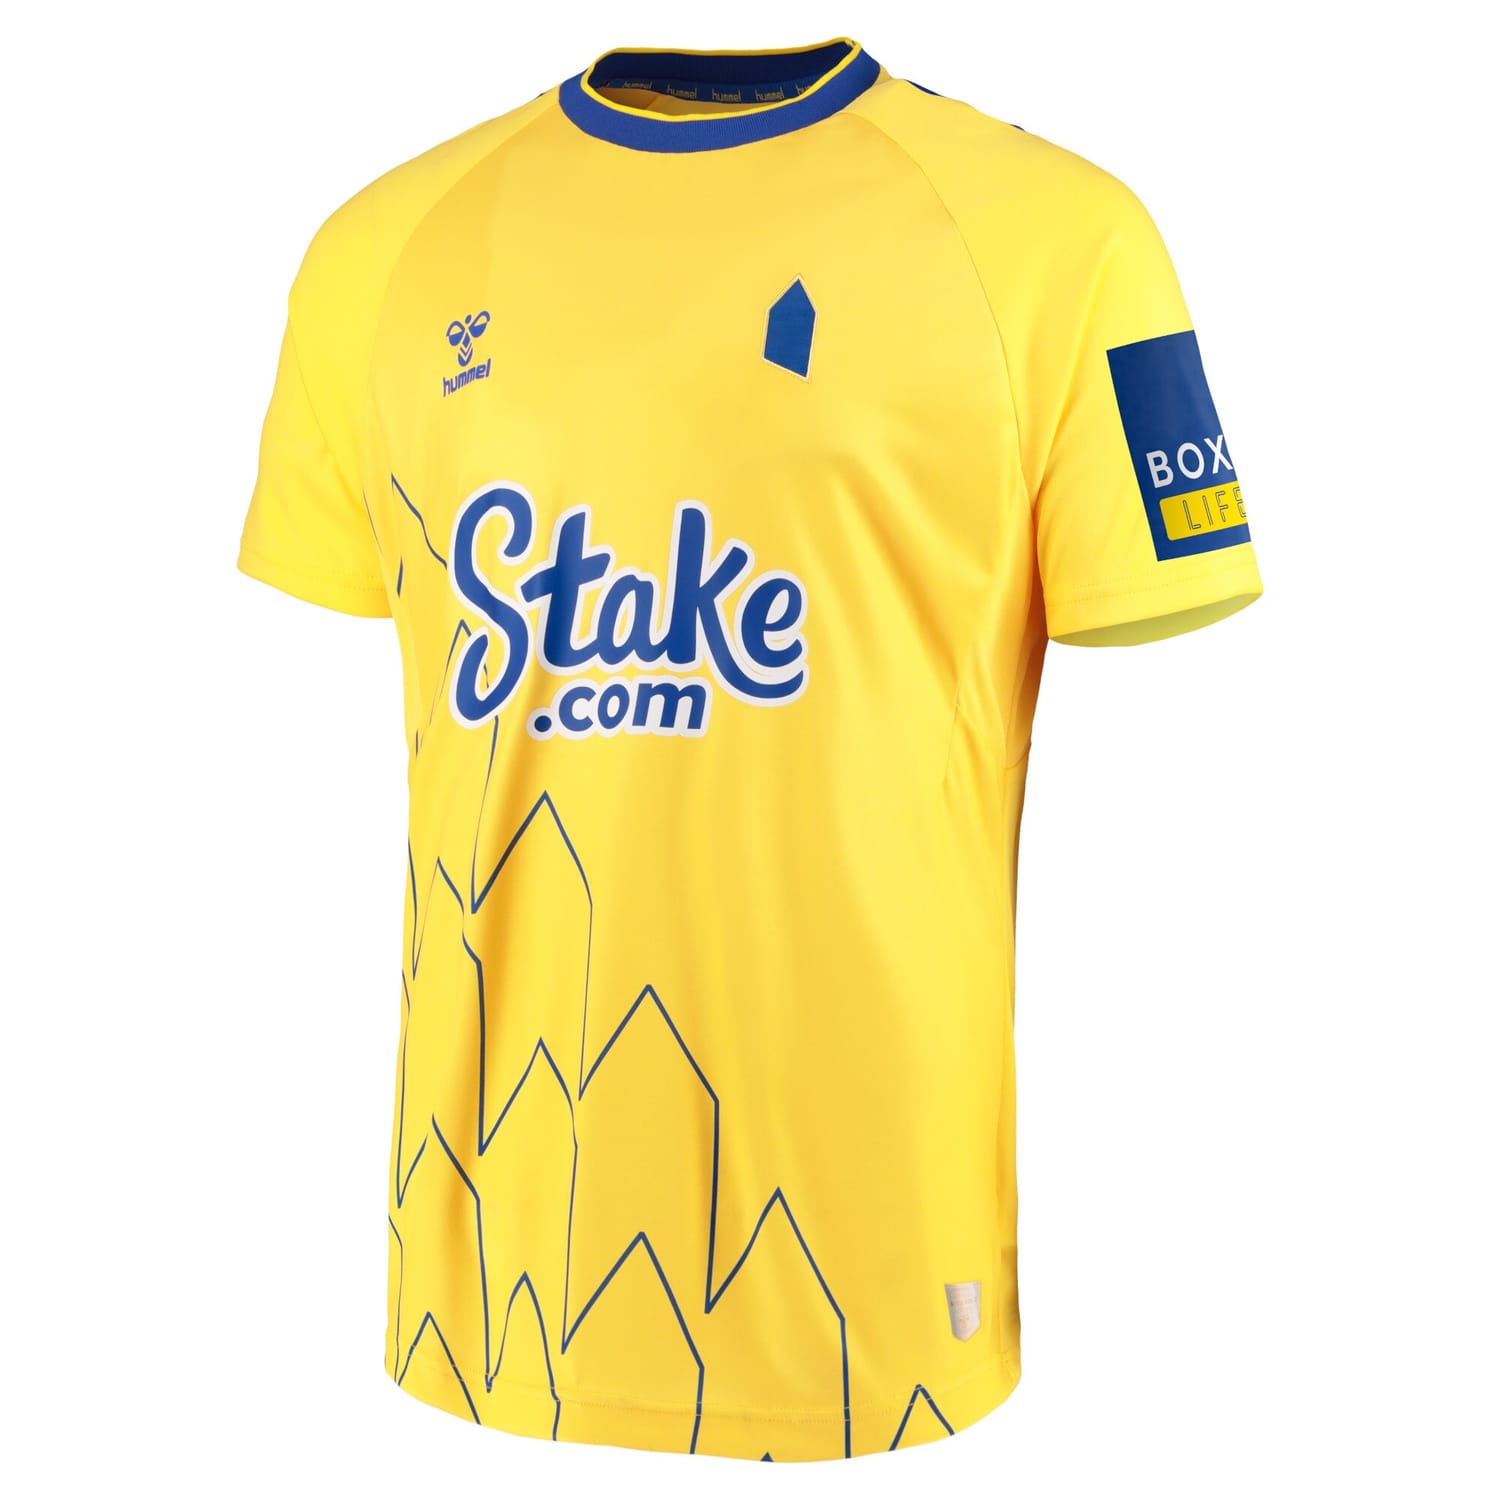 Premier League Everton Third Jersey Shirt 2022-23 player Dominic Calvert-Lewin 9 printing for Men